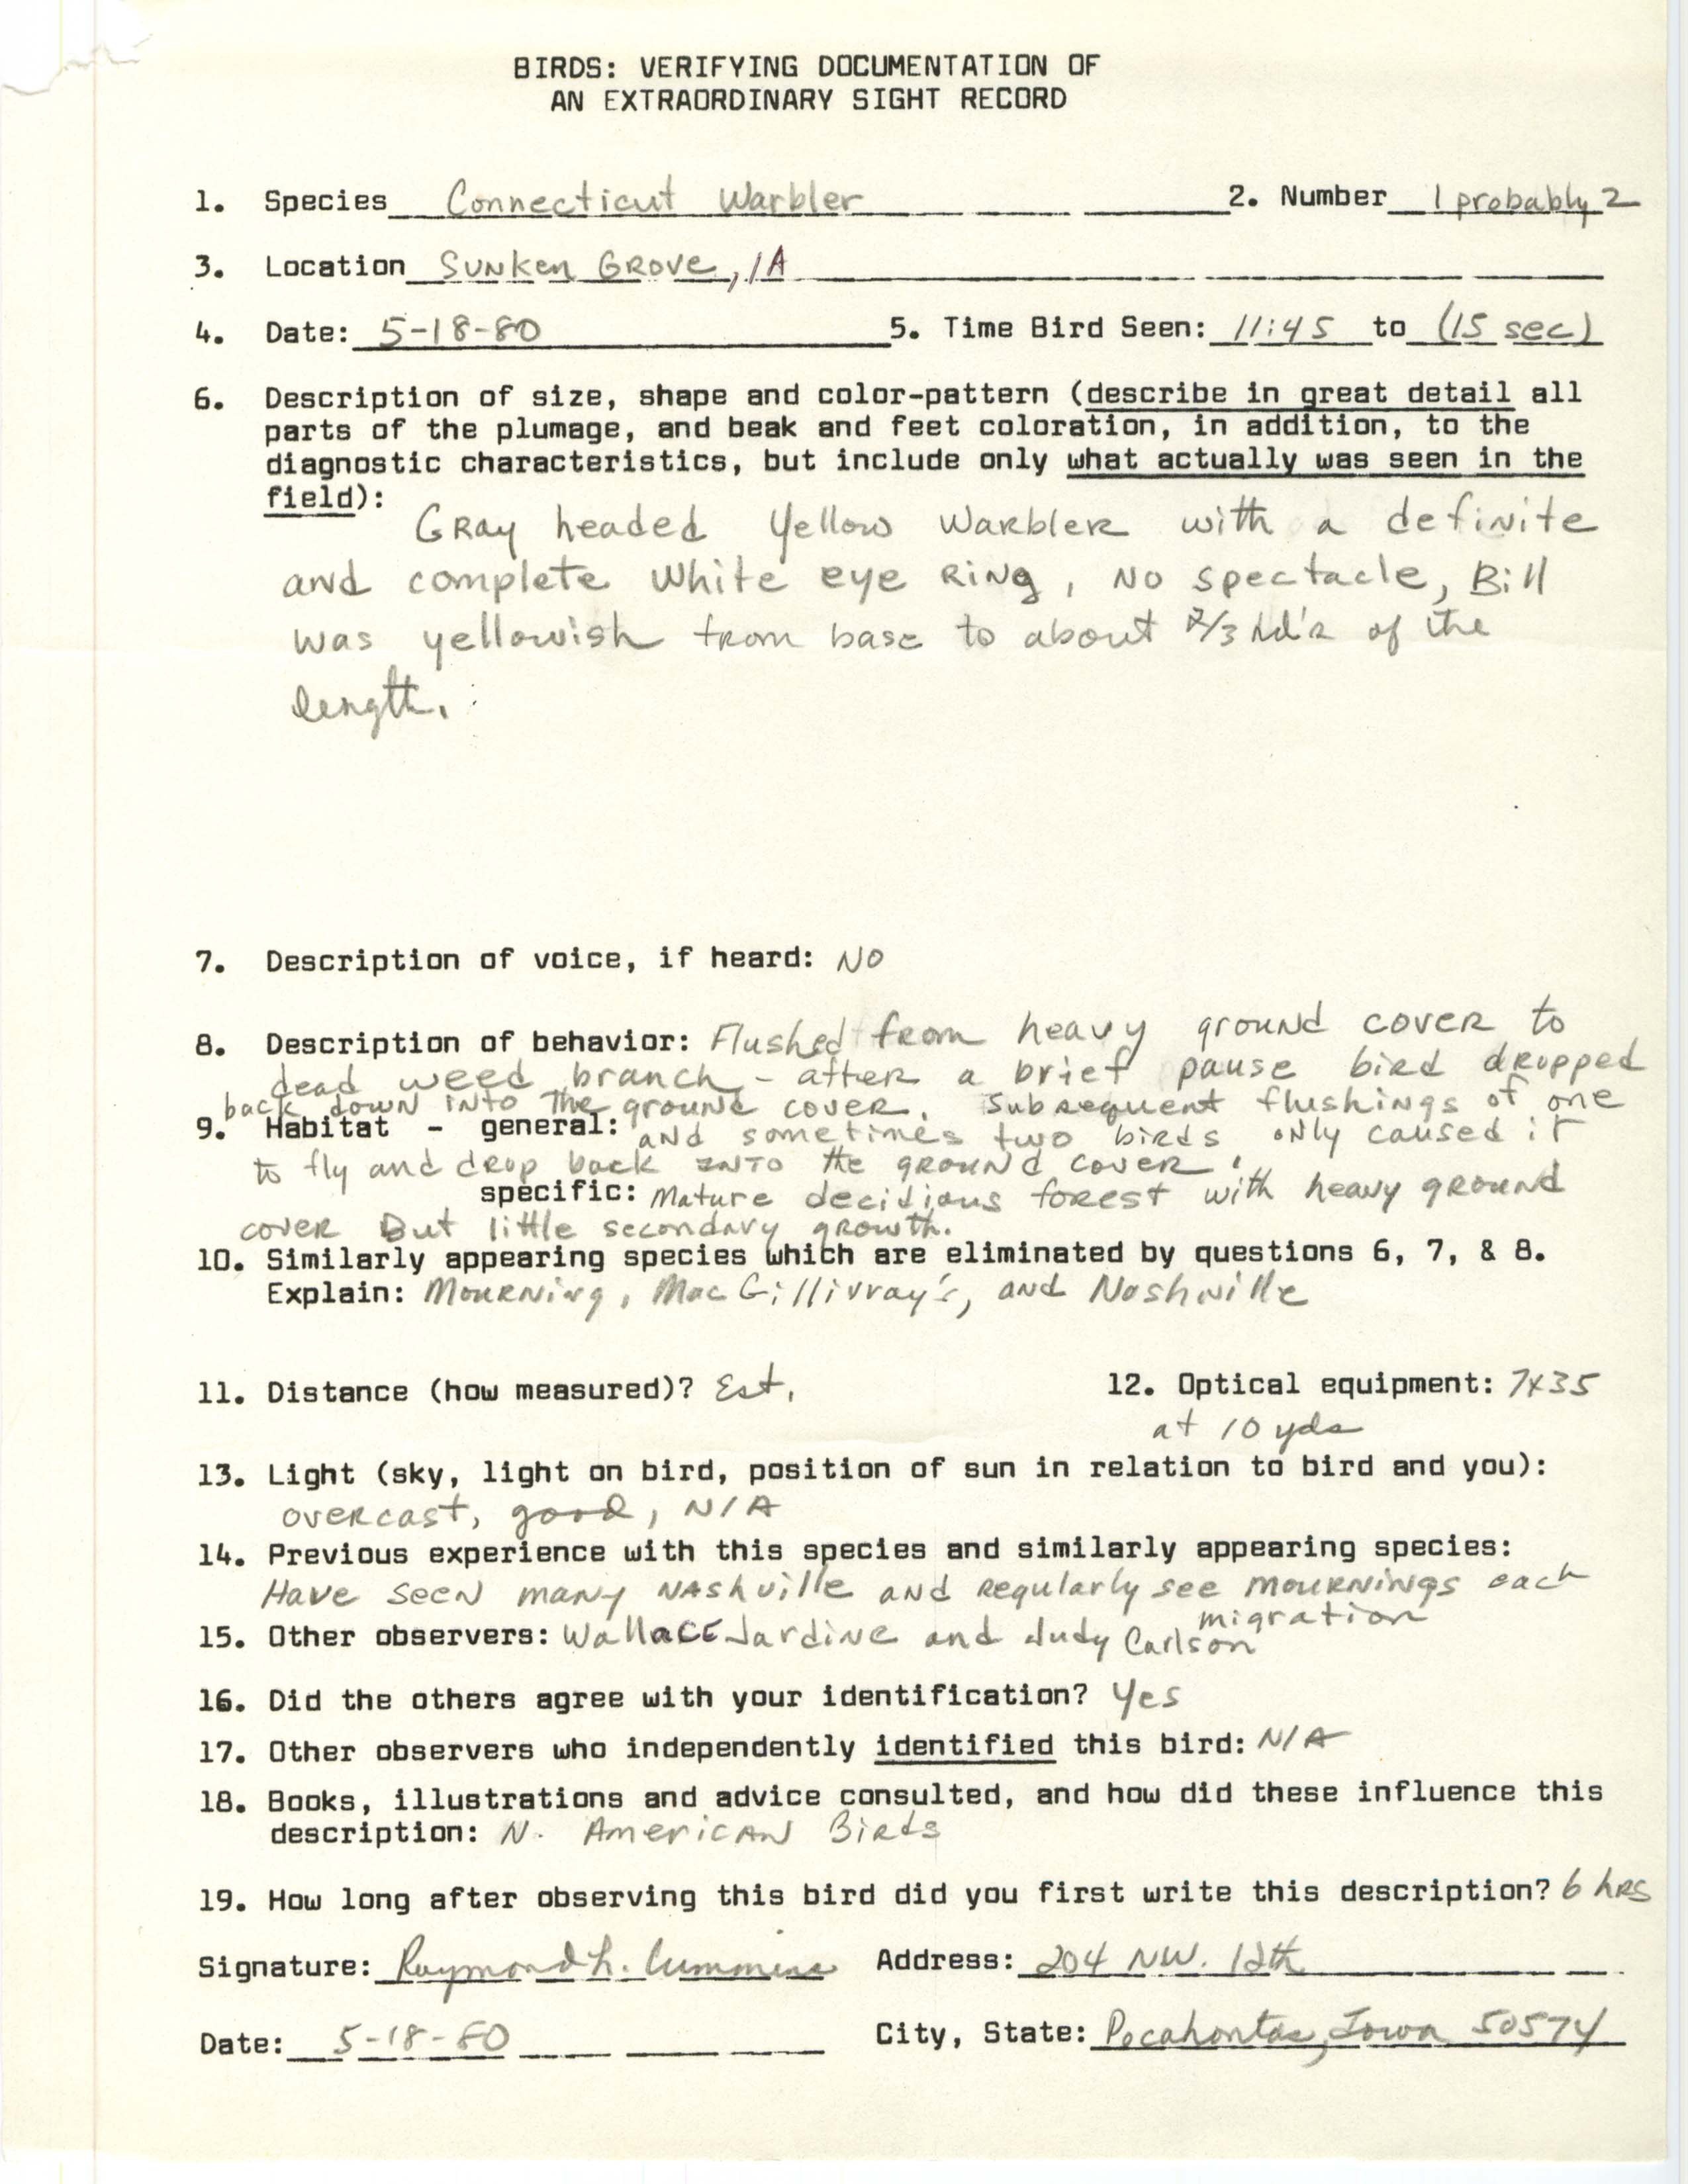 Rare bird documentation form for Connecticut Warbler at Sunken Grove, 1980